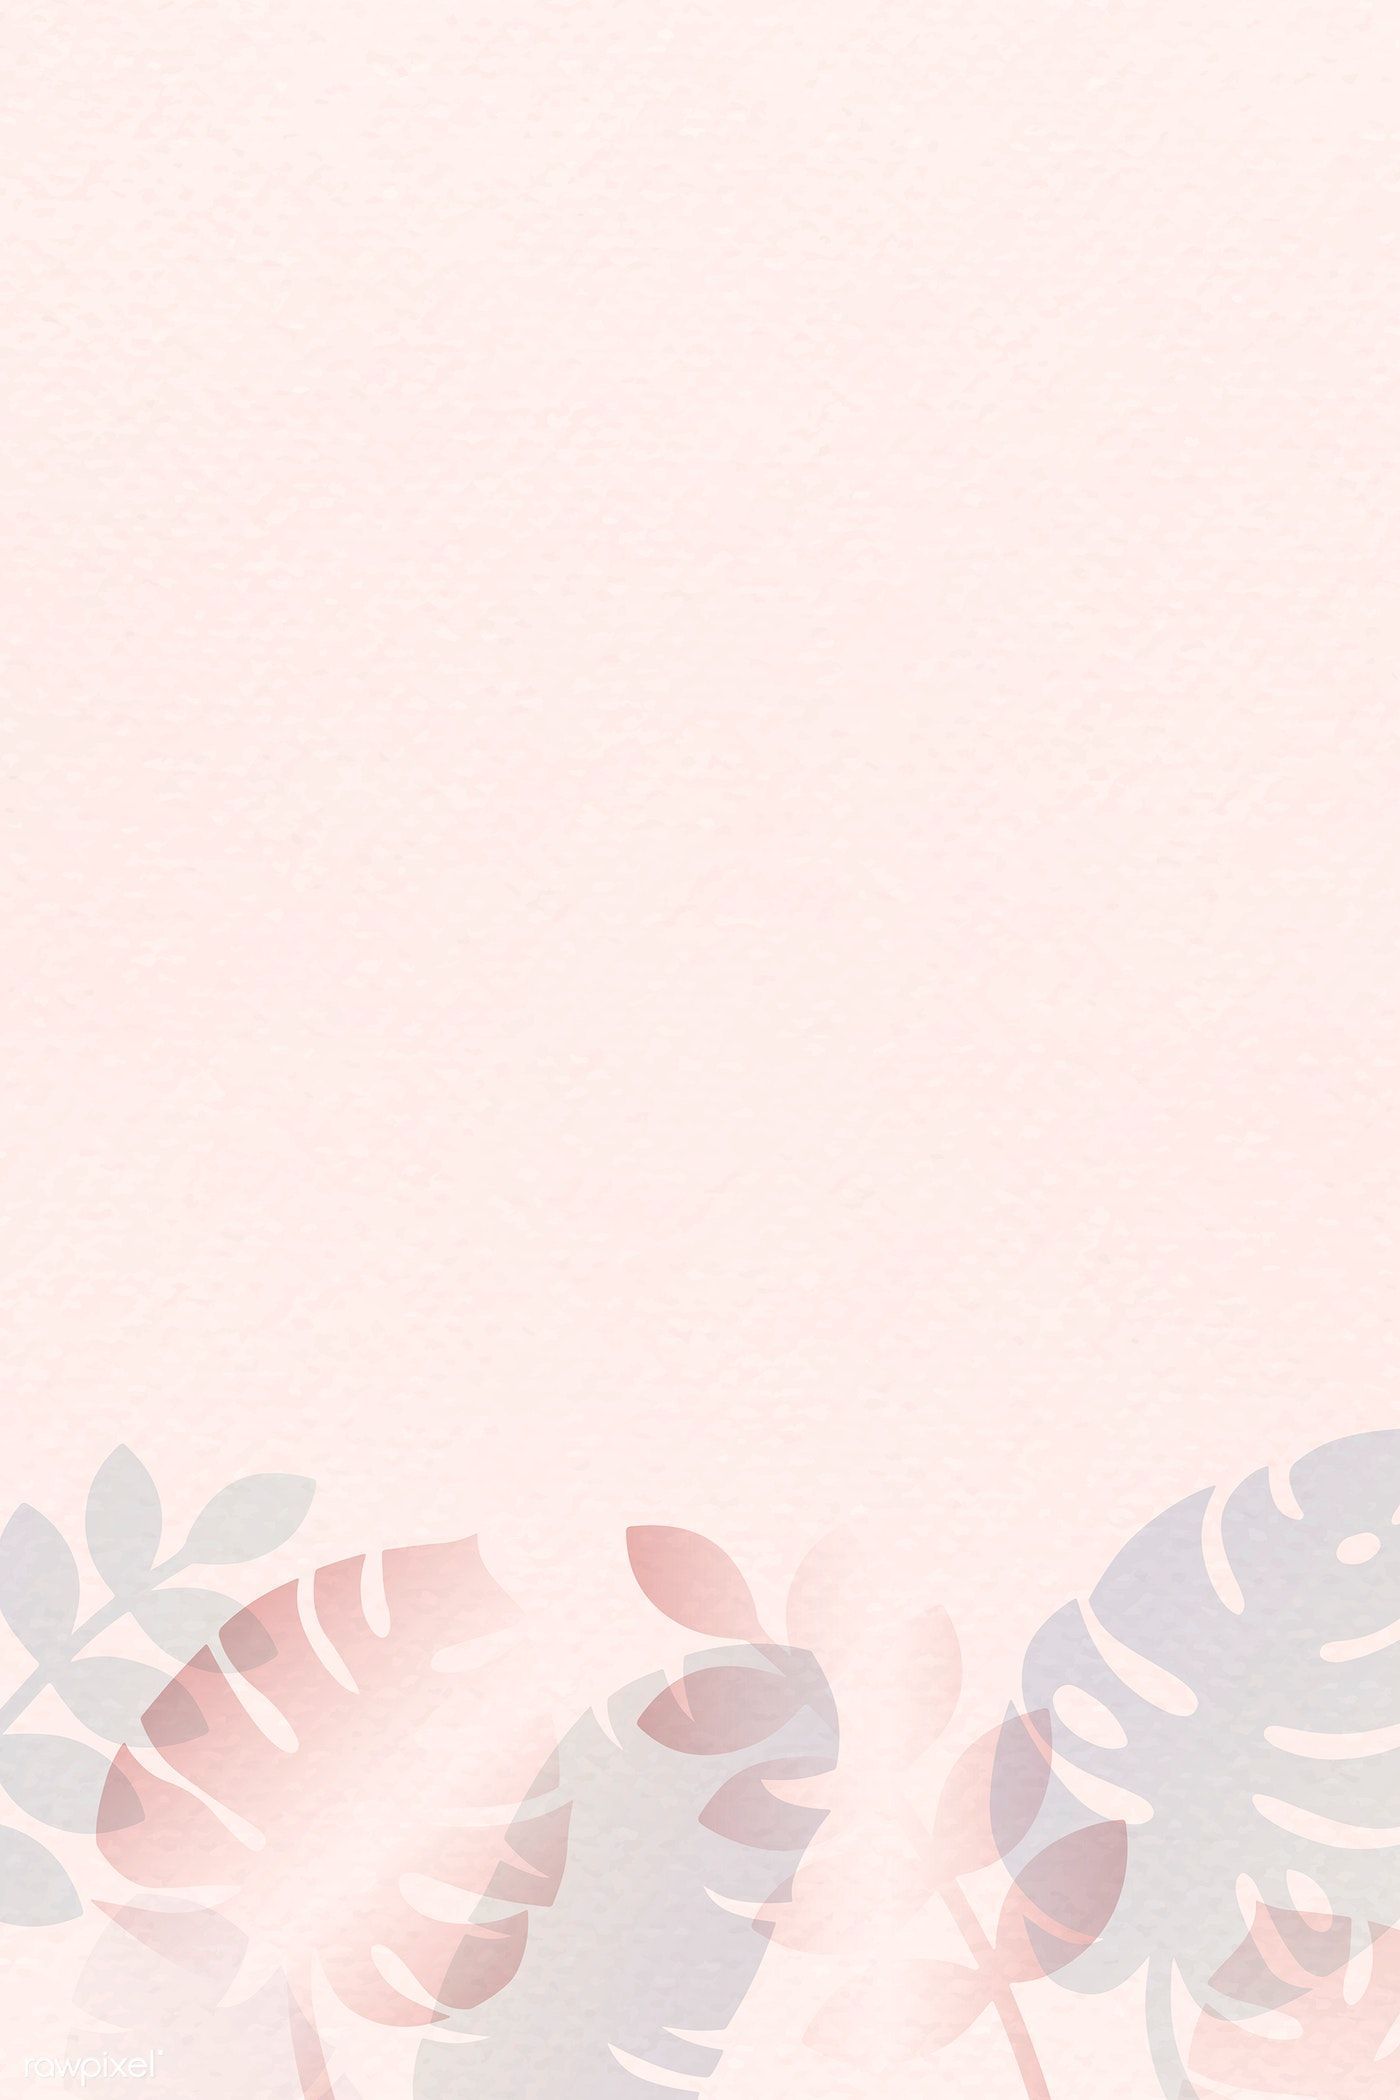 Pastel Pink Cute Wallpaper Free Pastel Pink Cute Background